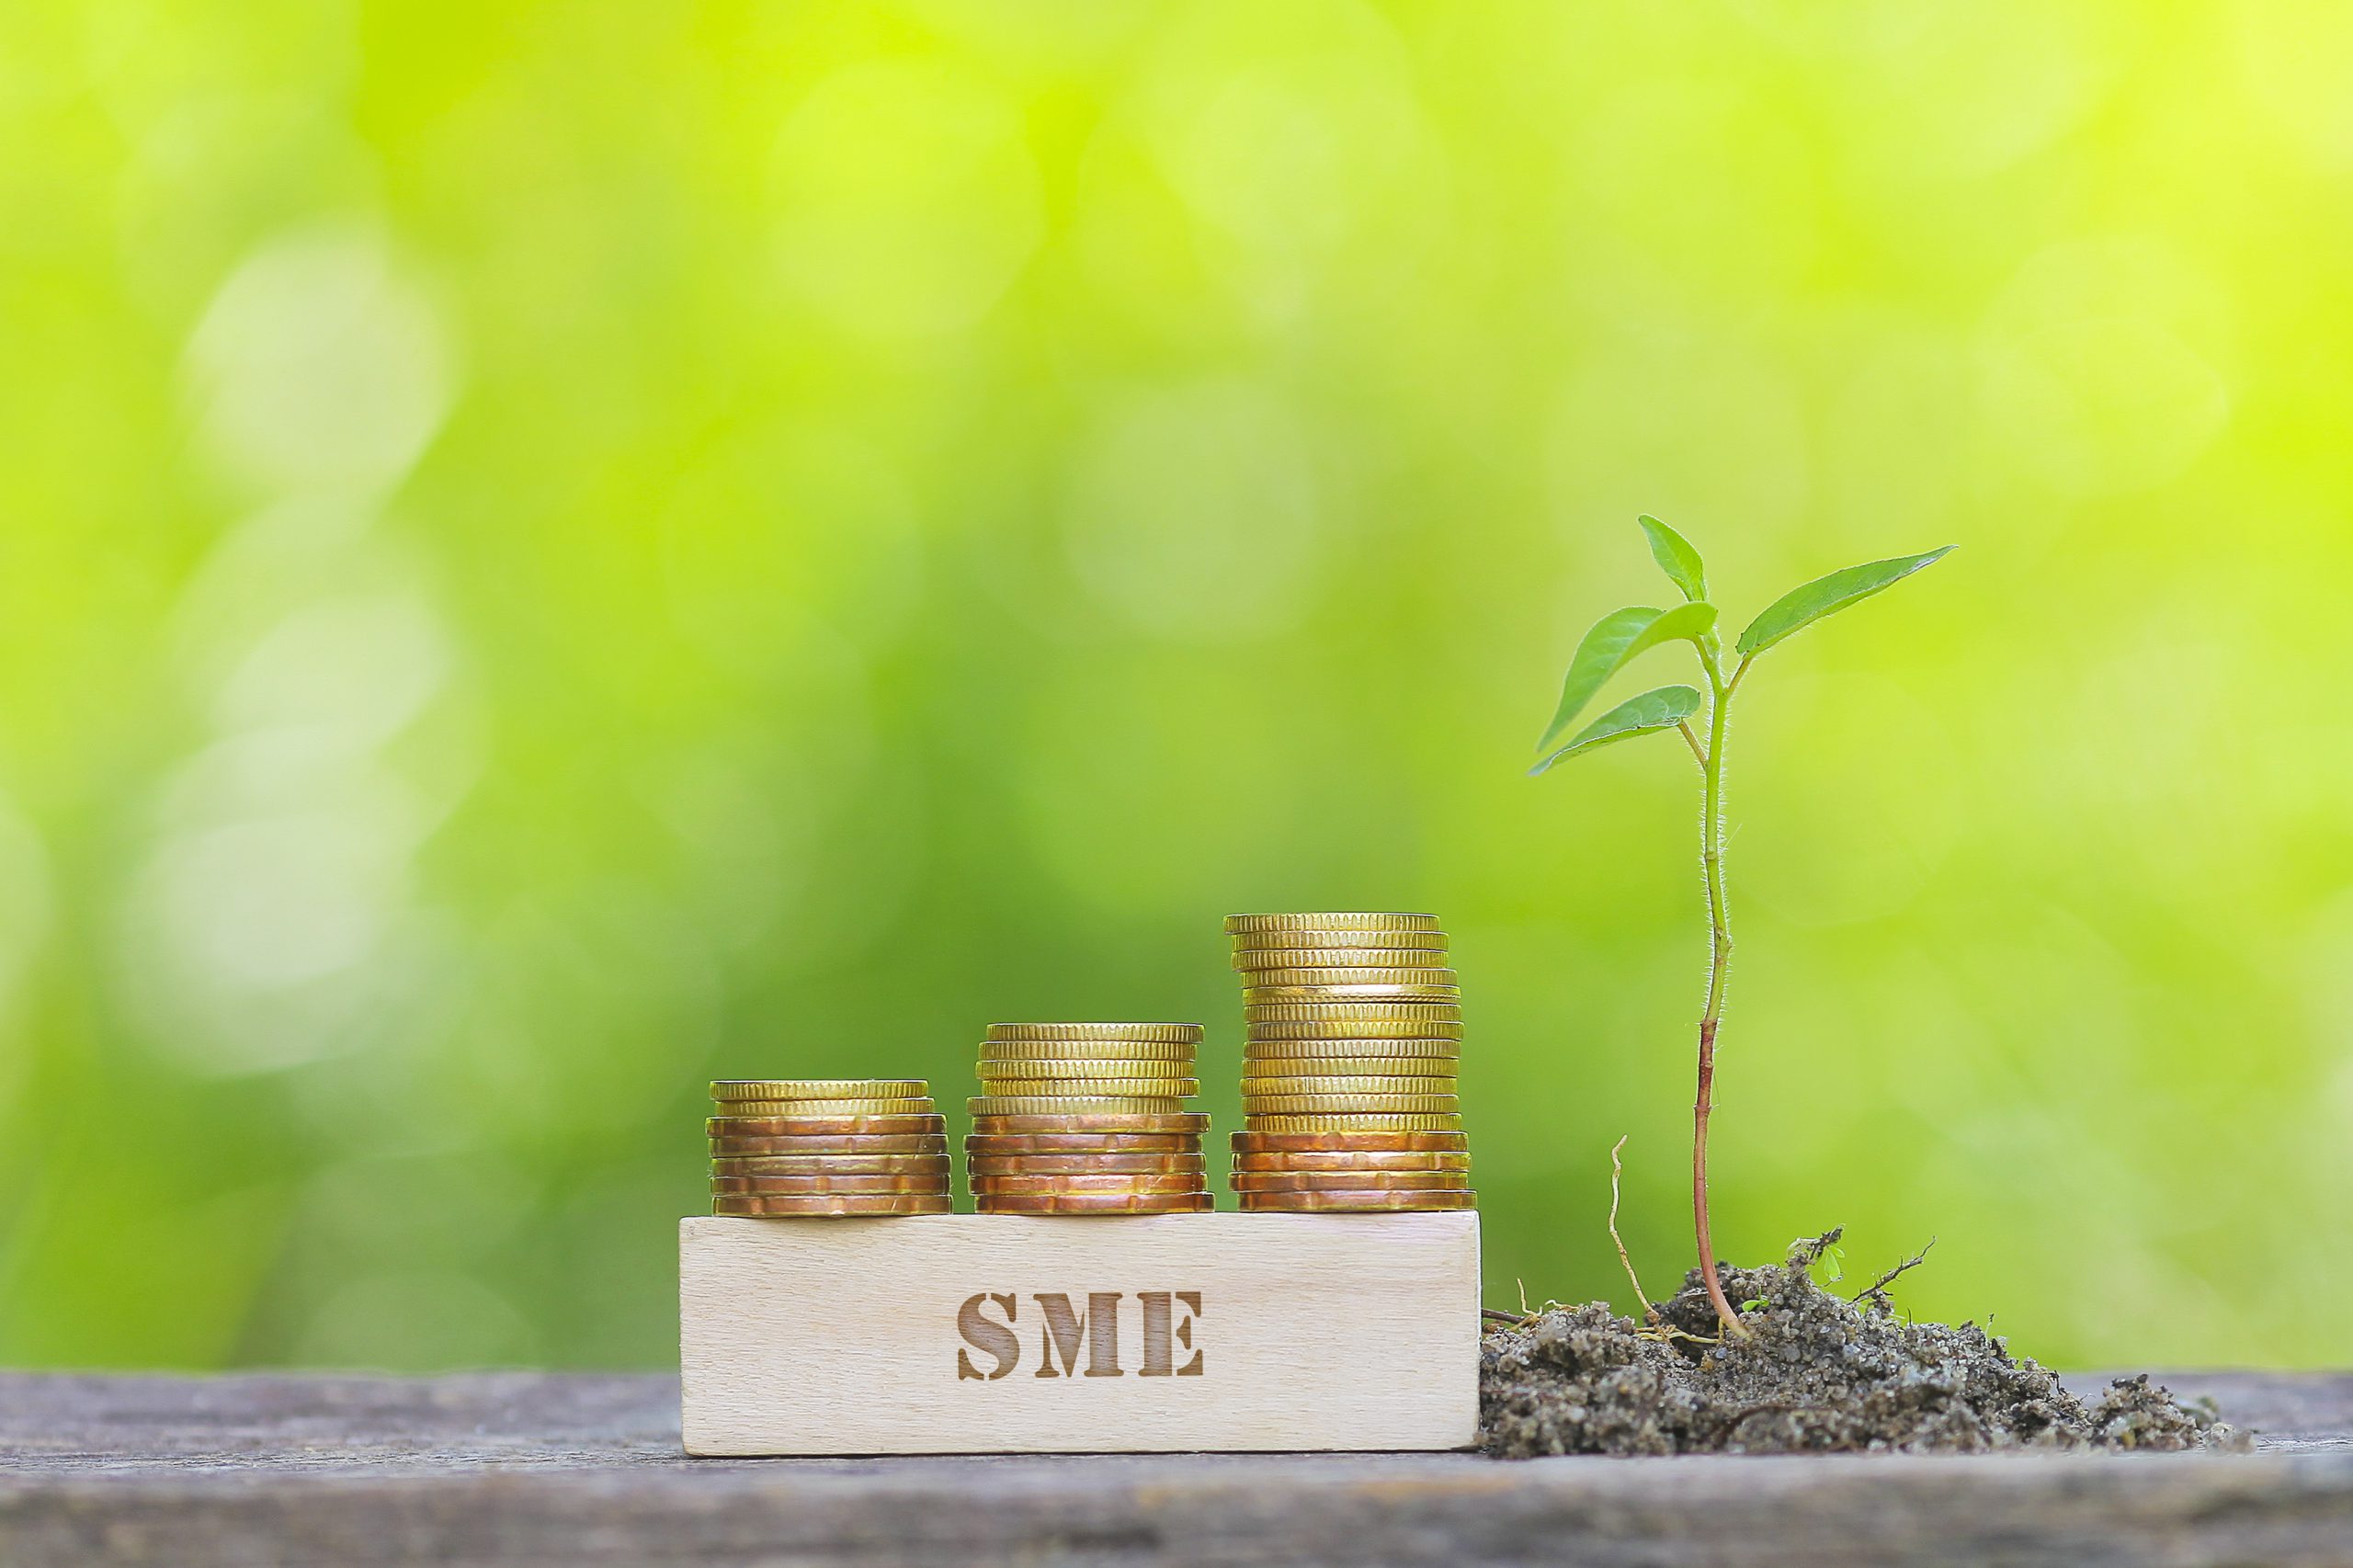 EU4Environment supports greening small and medium enterprises in